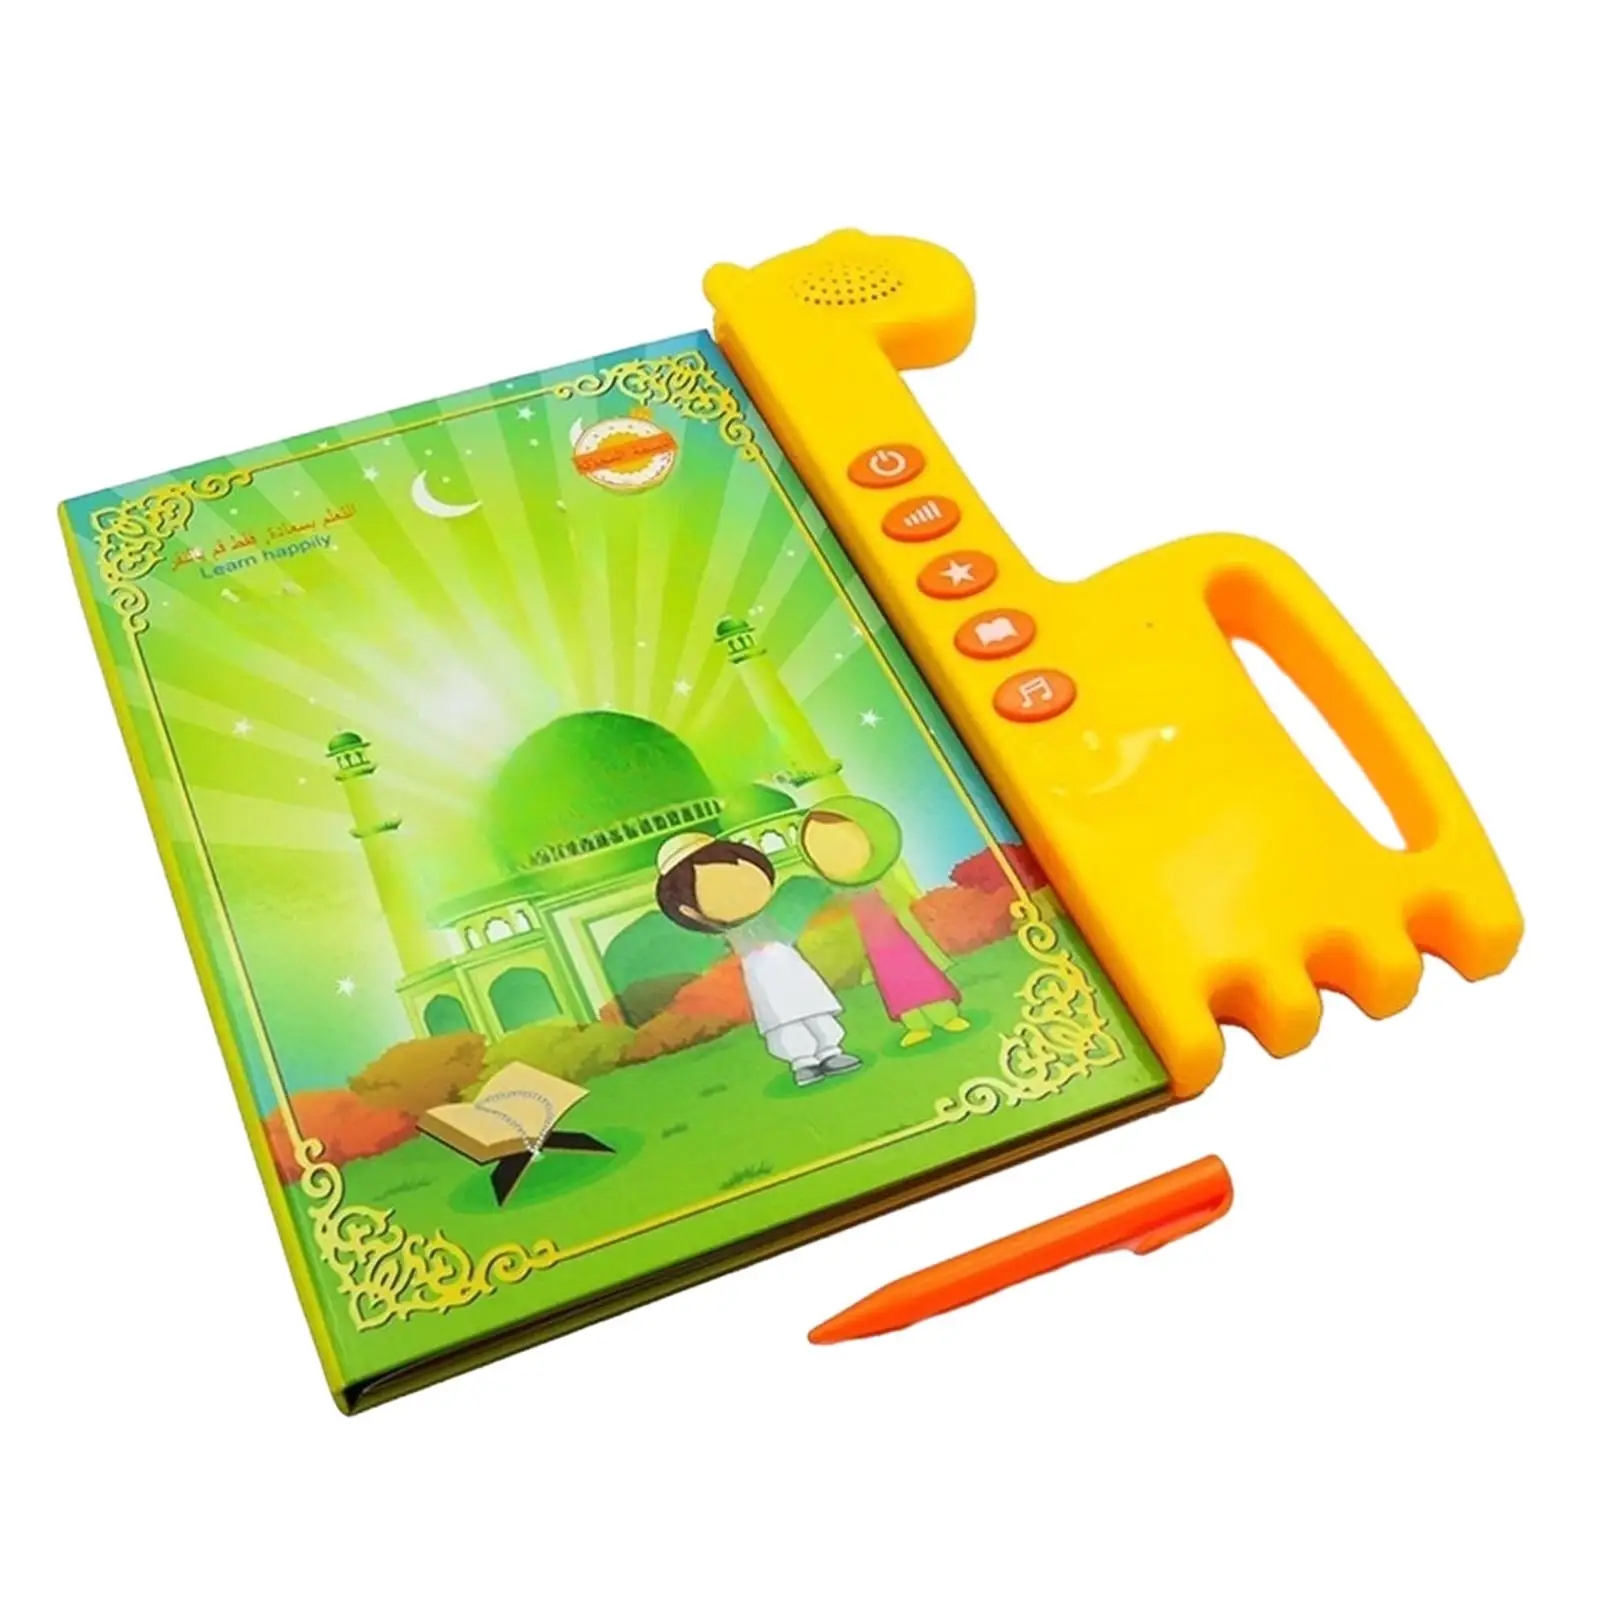 Arabic Reading Machine Arabic Word Learning Audio Book Multifunction Early Educational Machine for Bithday Gift Girls Kids Boys